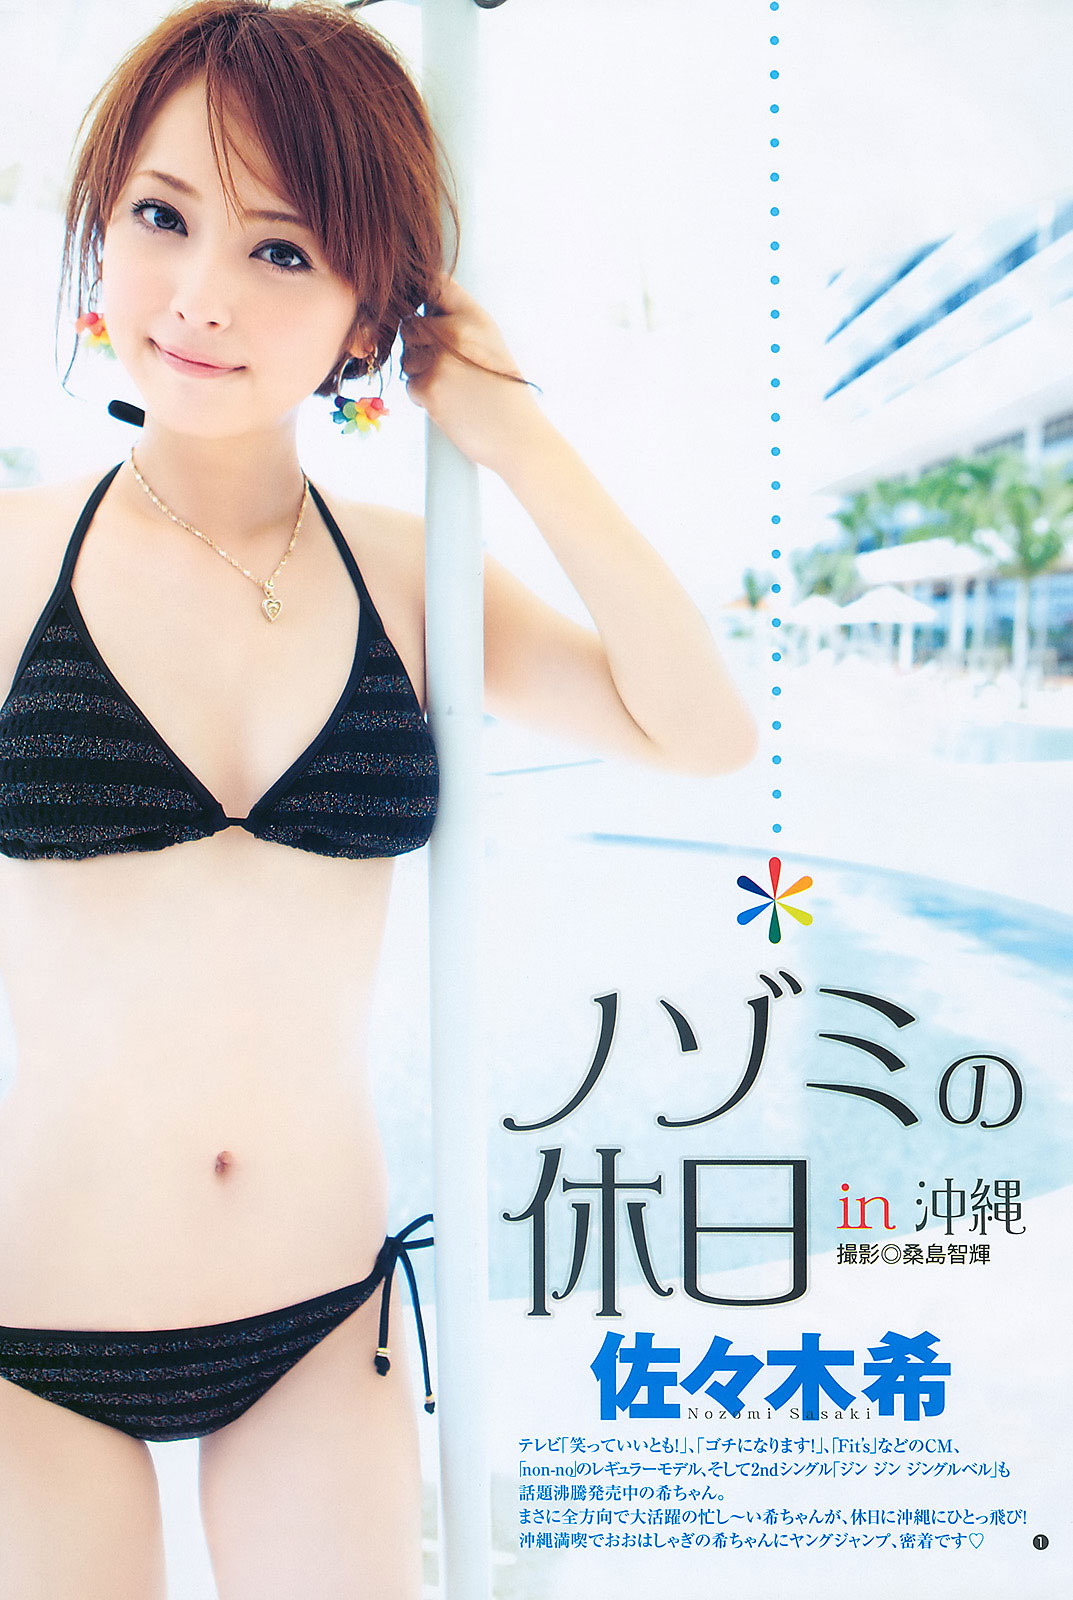 Nozomi Sasaki bikini photo book